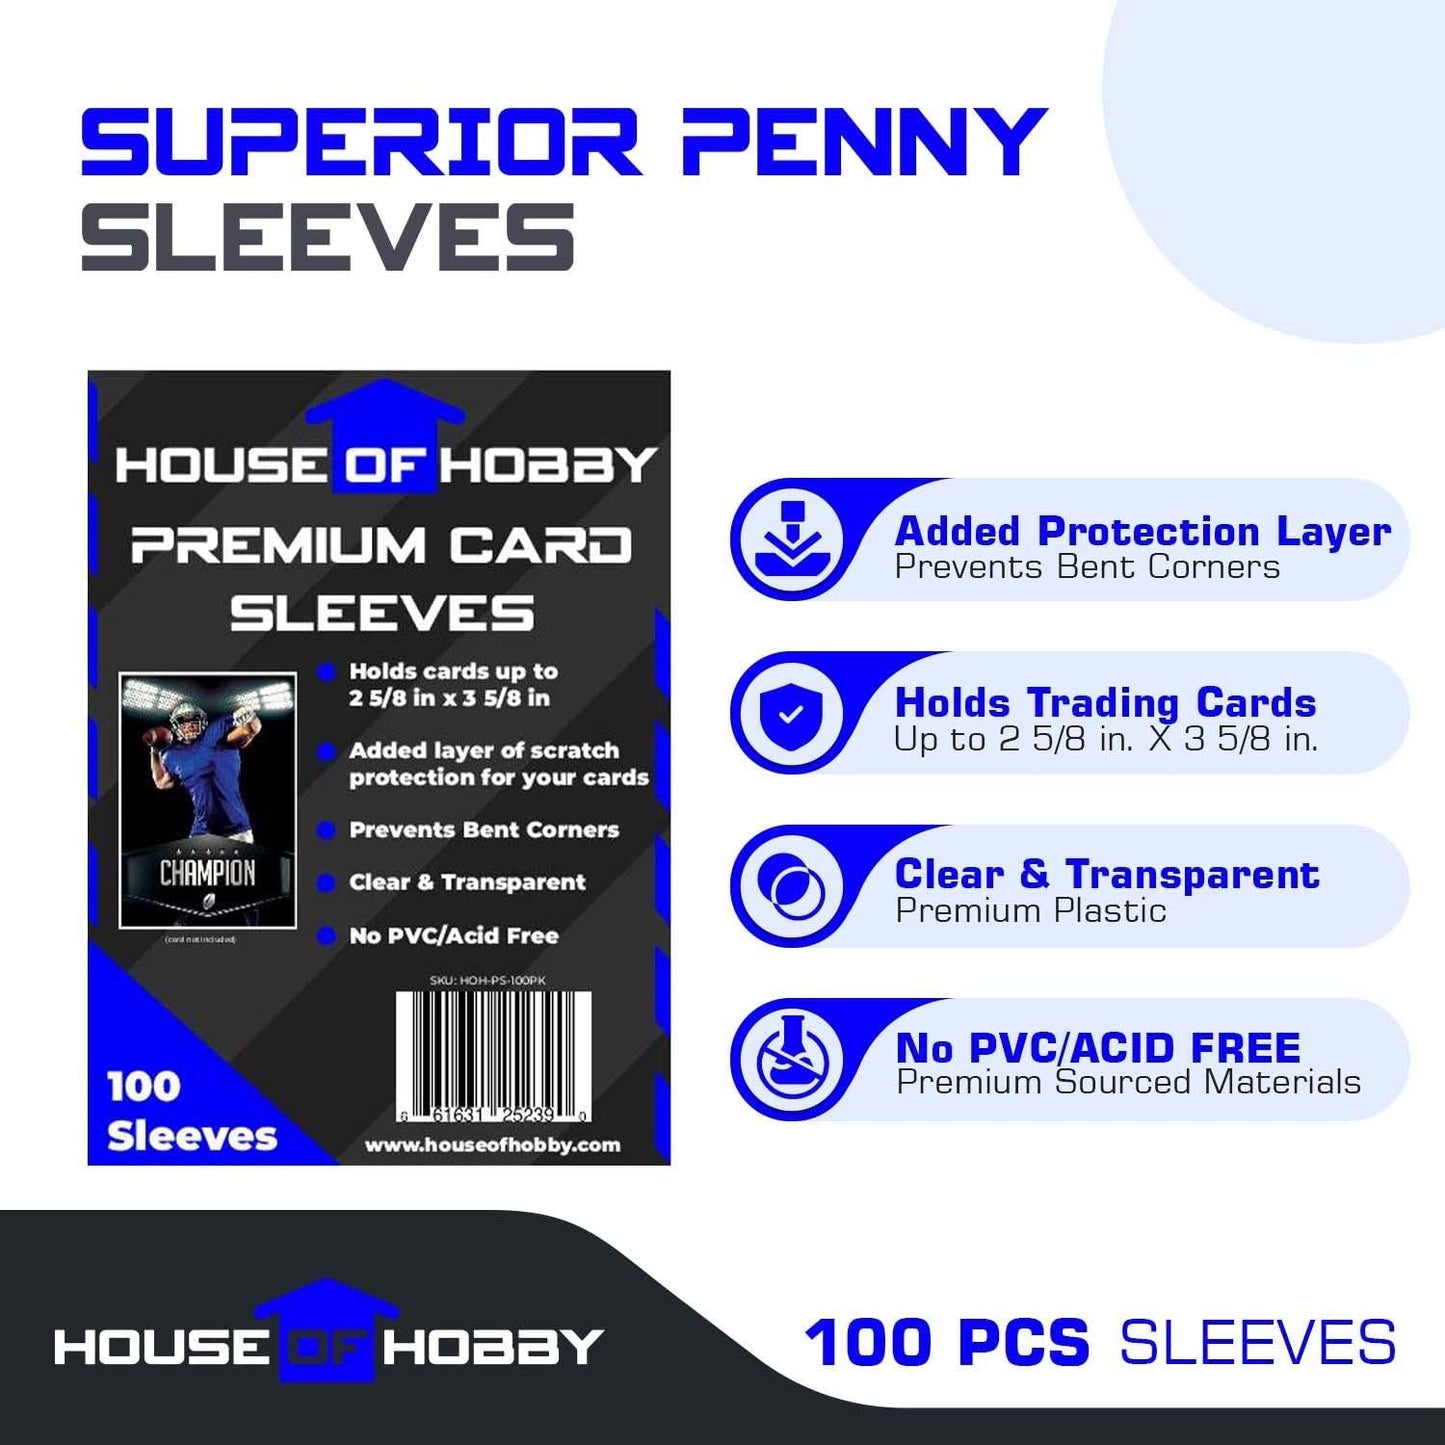 Top Loaders for Cards & Penny Sleeves  Bundle - 100 Toploaders & 100 Penny Sleeves - The House of Hobby